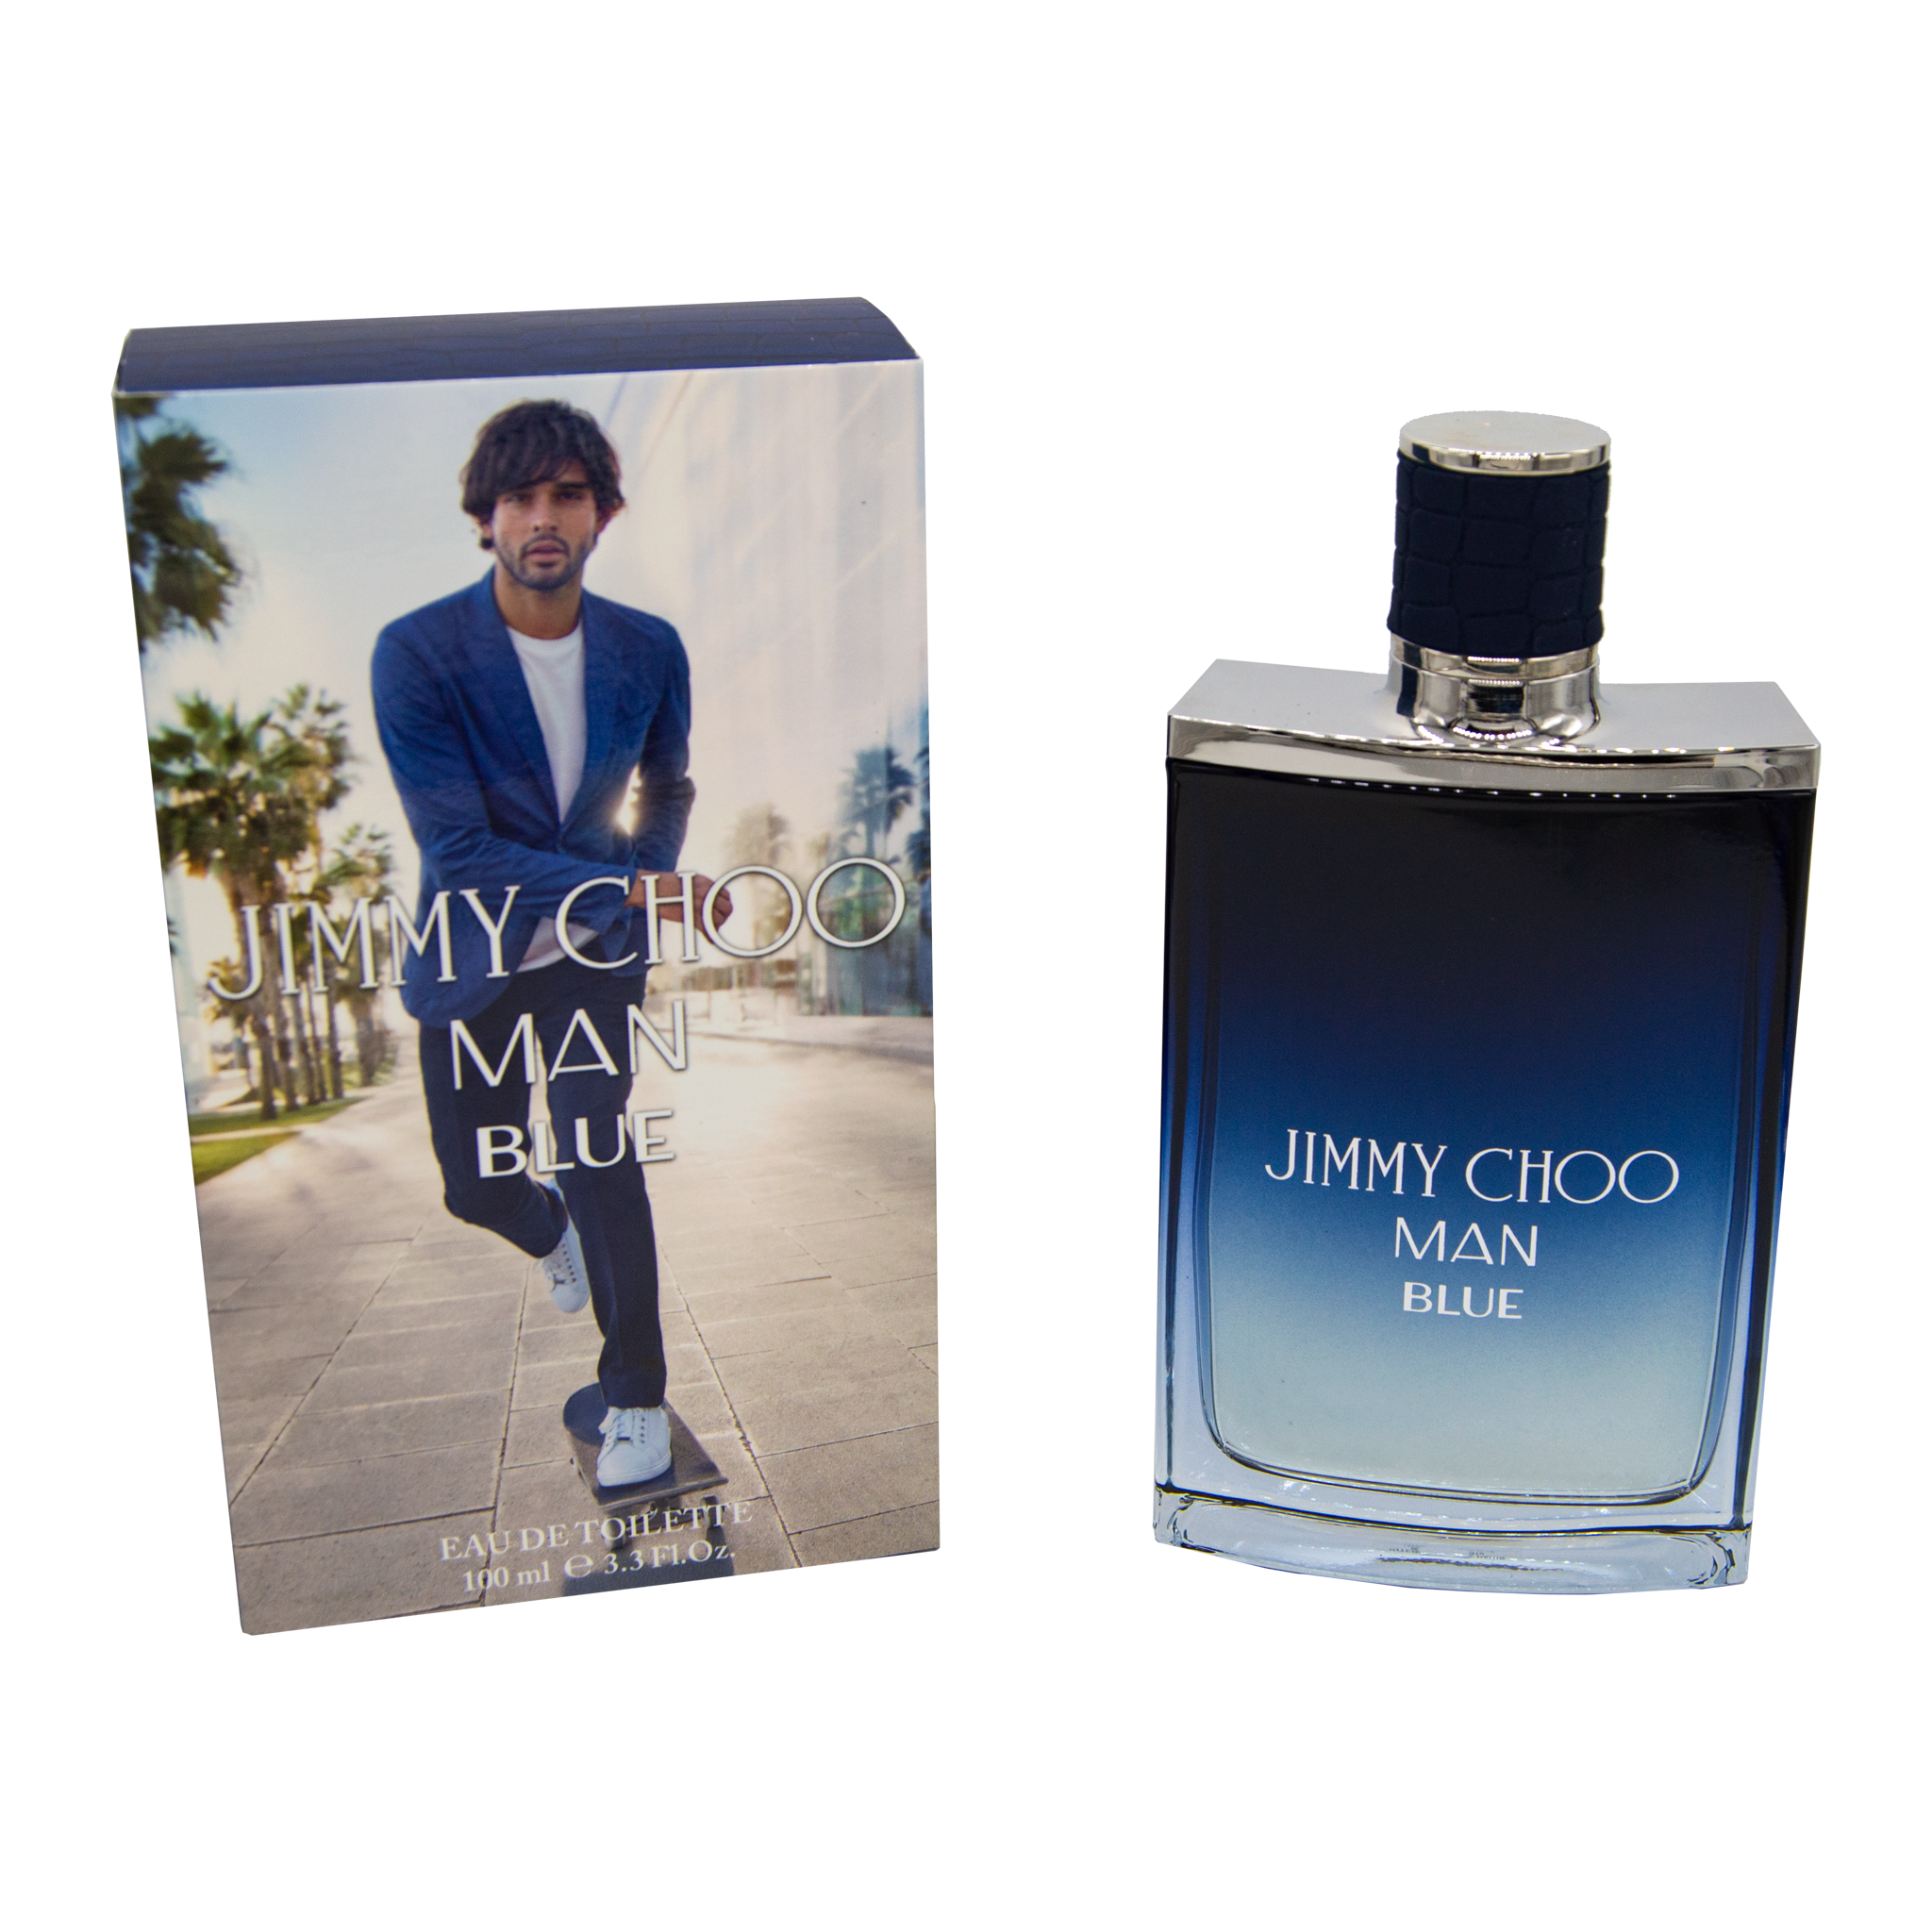 Jimmy Choo Man Blue – Essence Fragrances Online